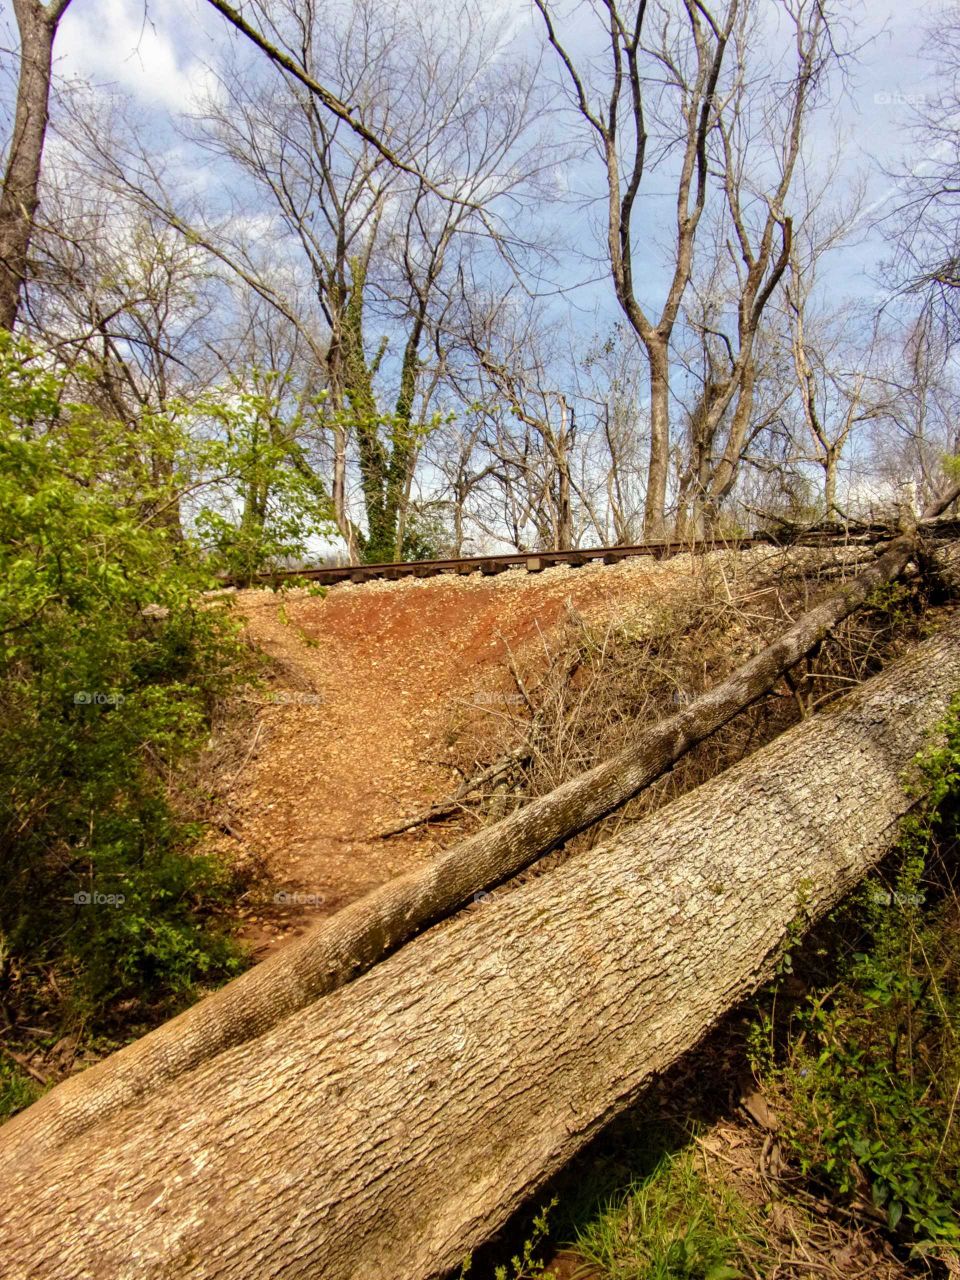 Felled trees leading up to railroad tracks